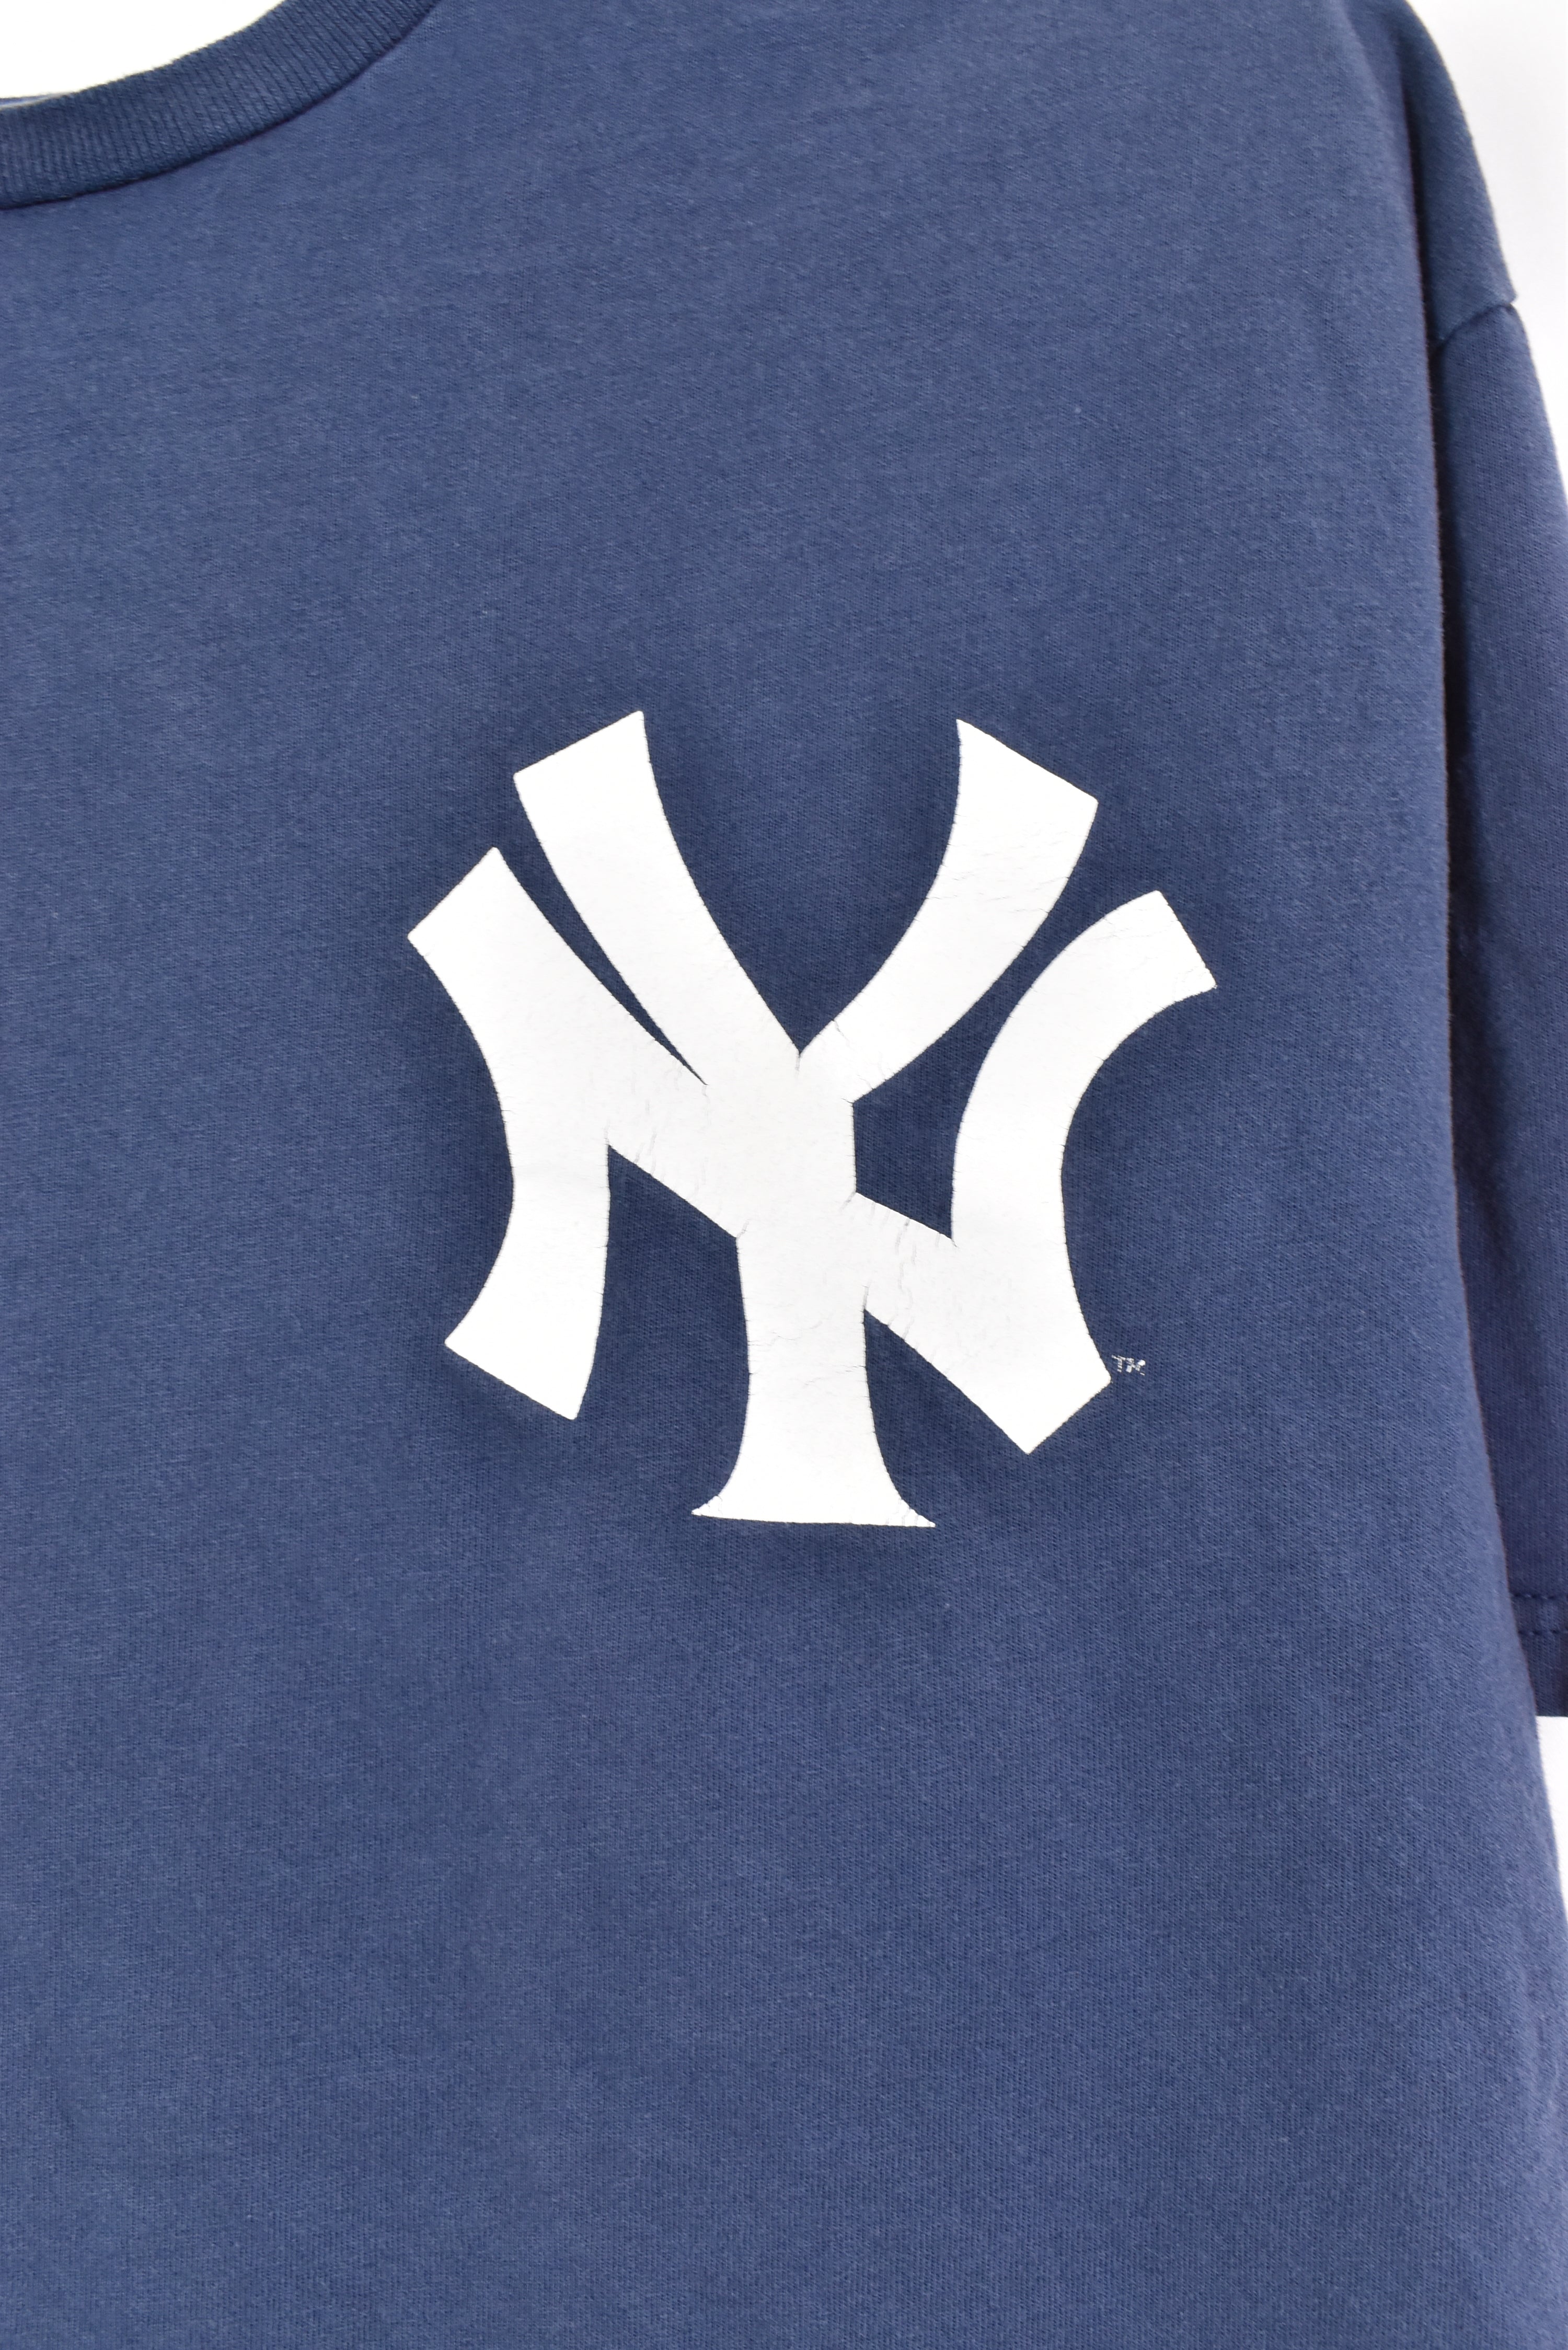 Vintage New York Yankees shirt, MLB American baseball graphic tee - large, navy blue PRO SPORT